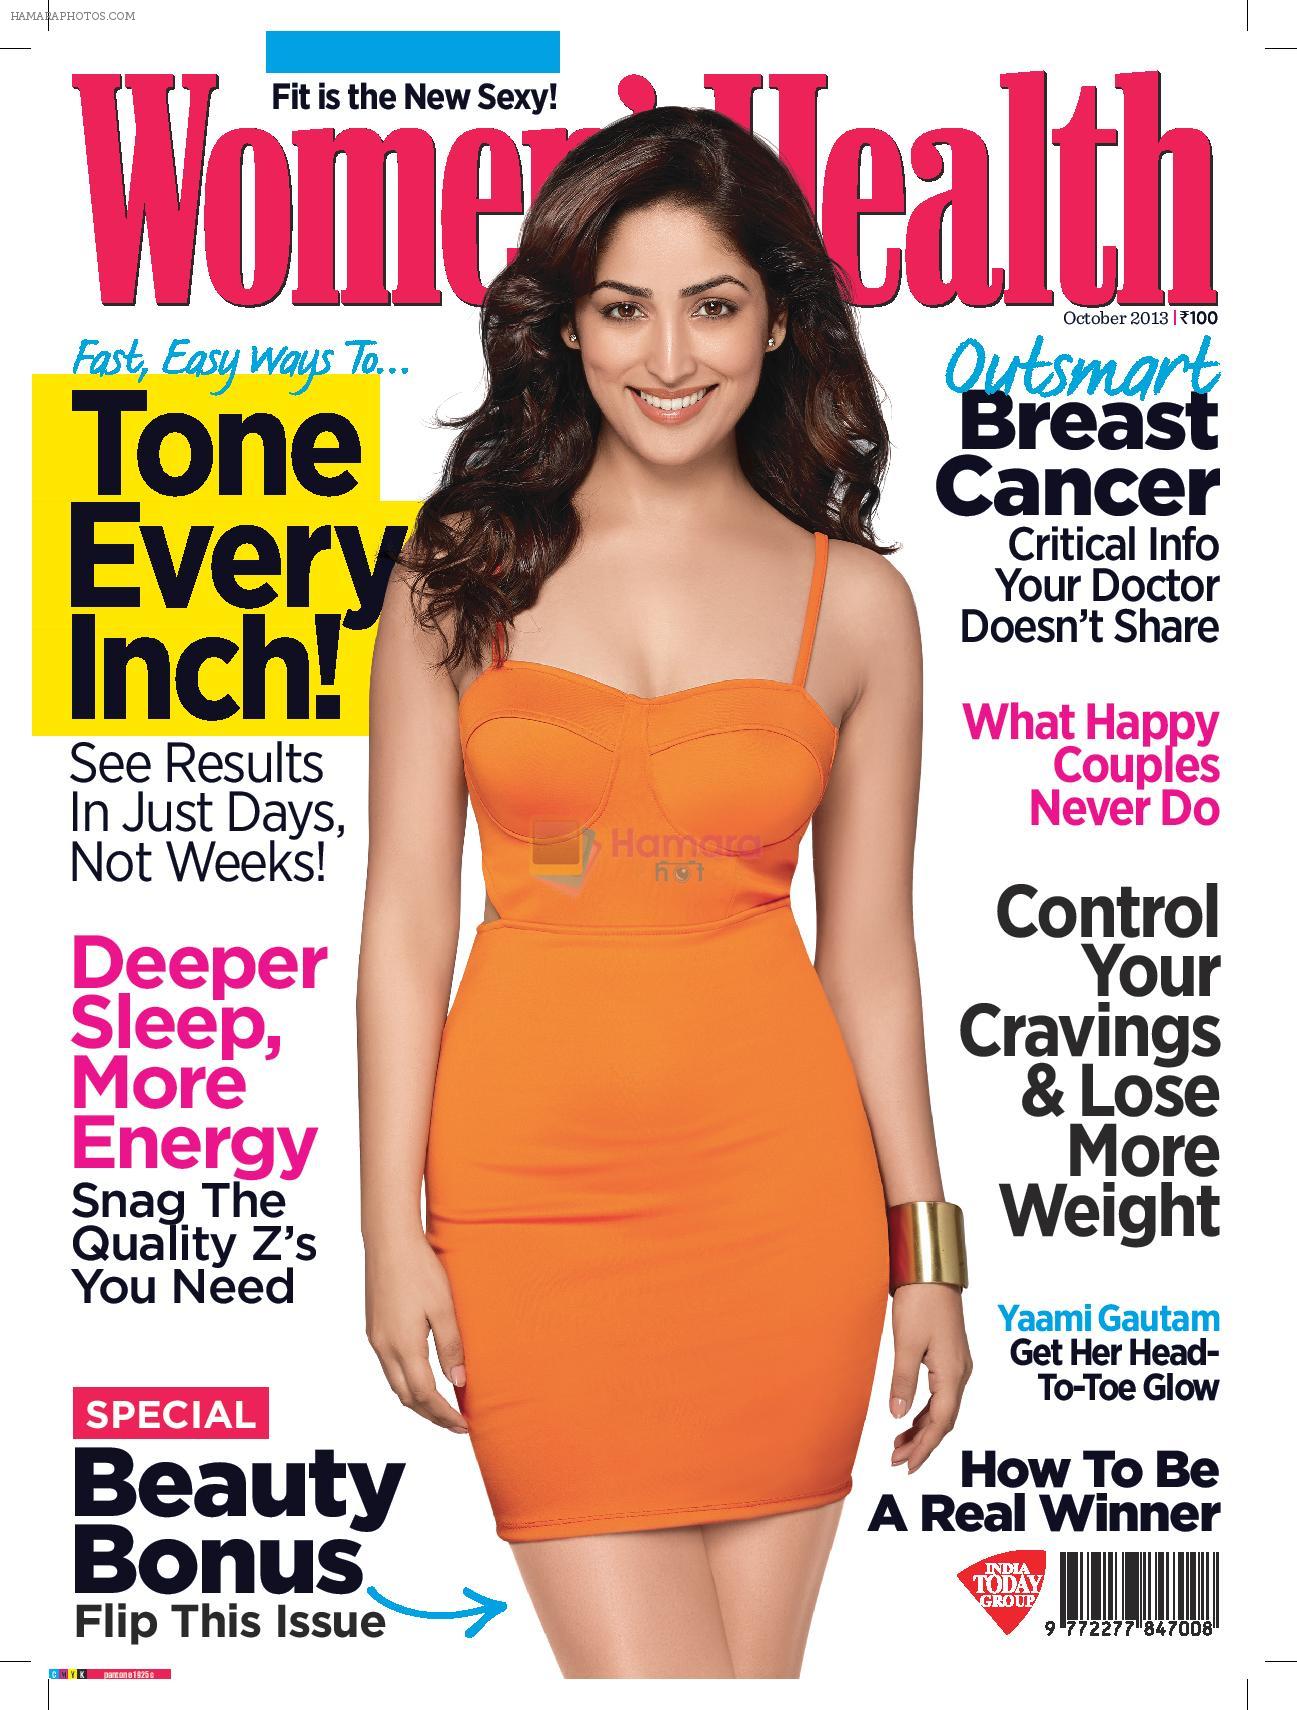 Yaami Gautam on the cover of Women's Health magazine's Oct. 2013 issue